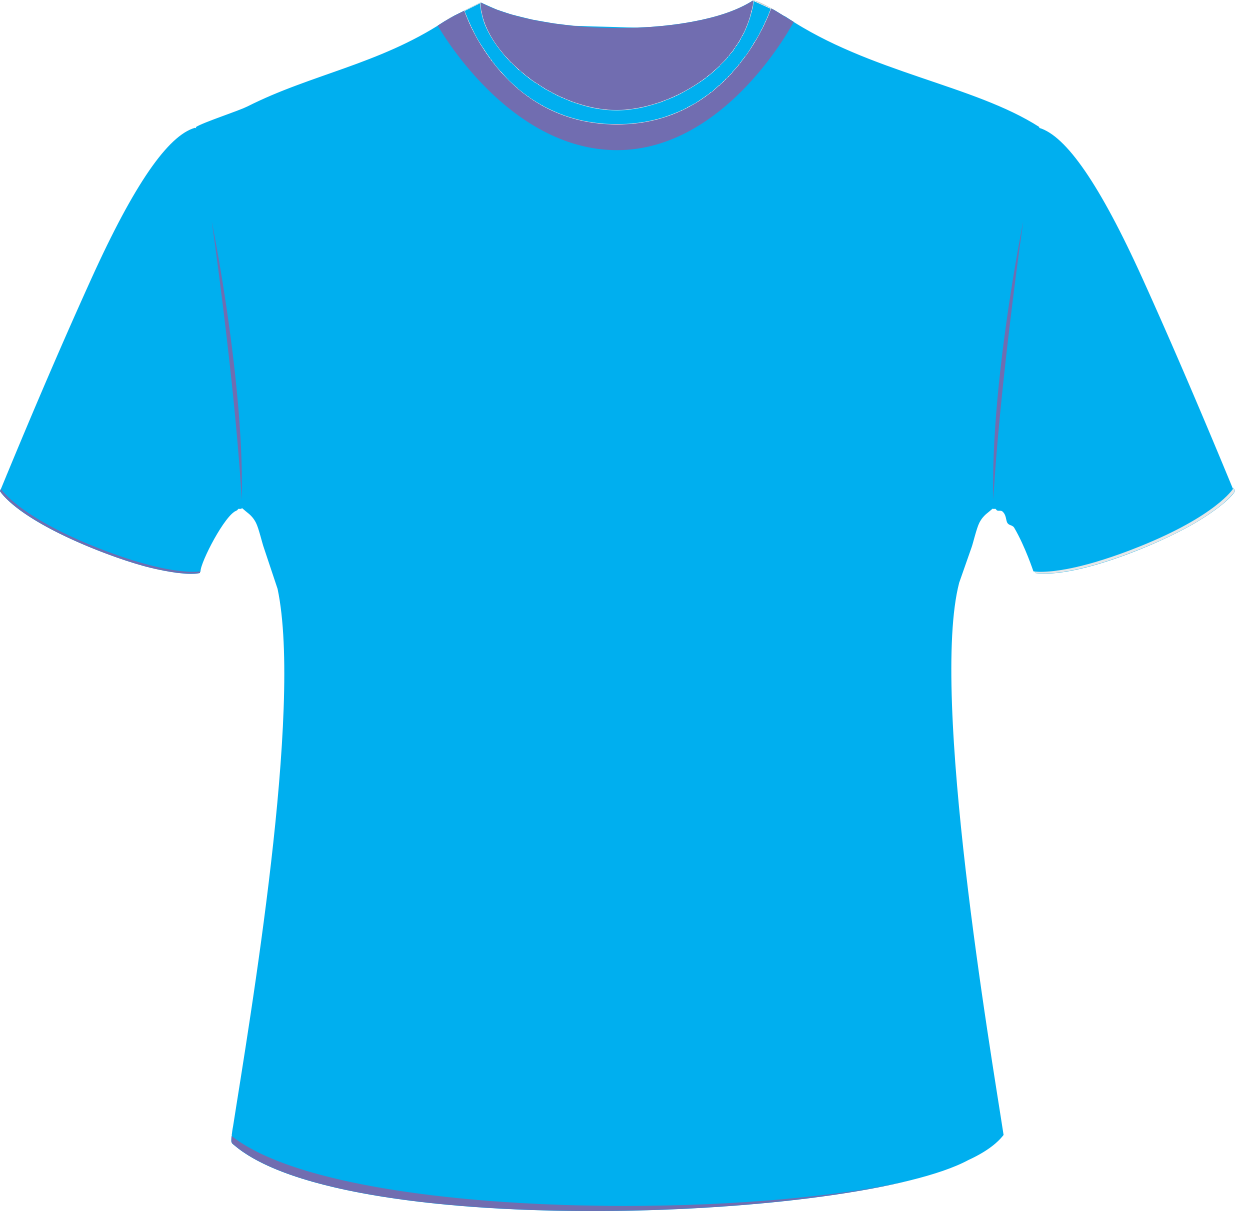 Mockup Camiseta Azul Editável